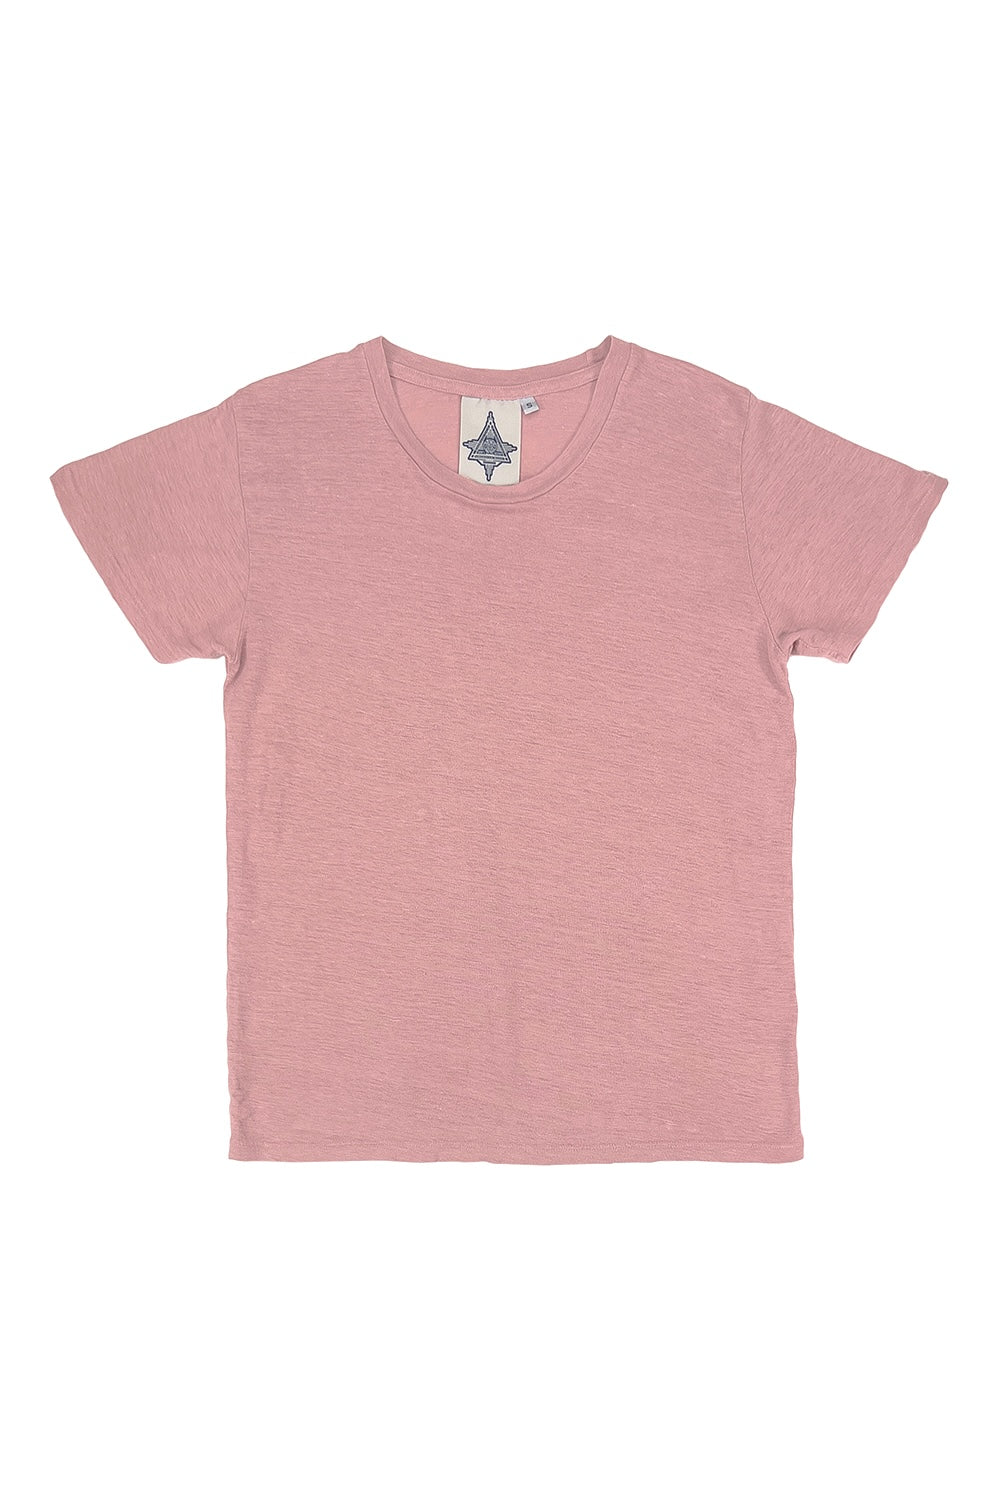 Madison 100% Hemp Tee | Jungmaven Hemp Clothing & Accessories / Color: Rose Quartz